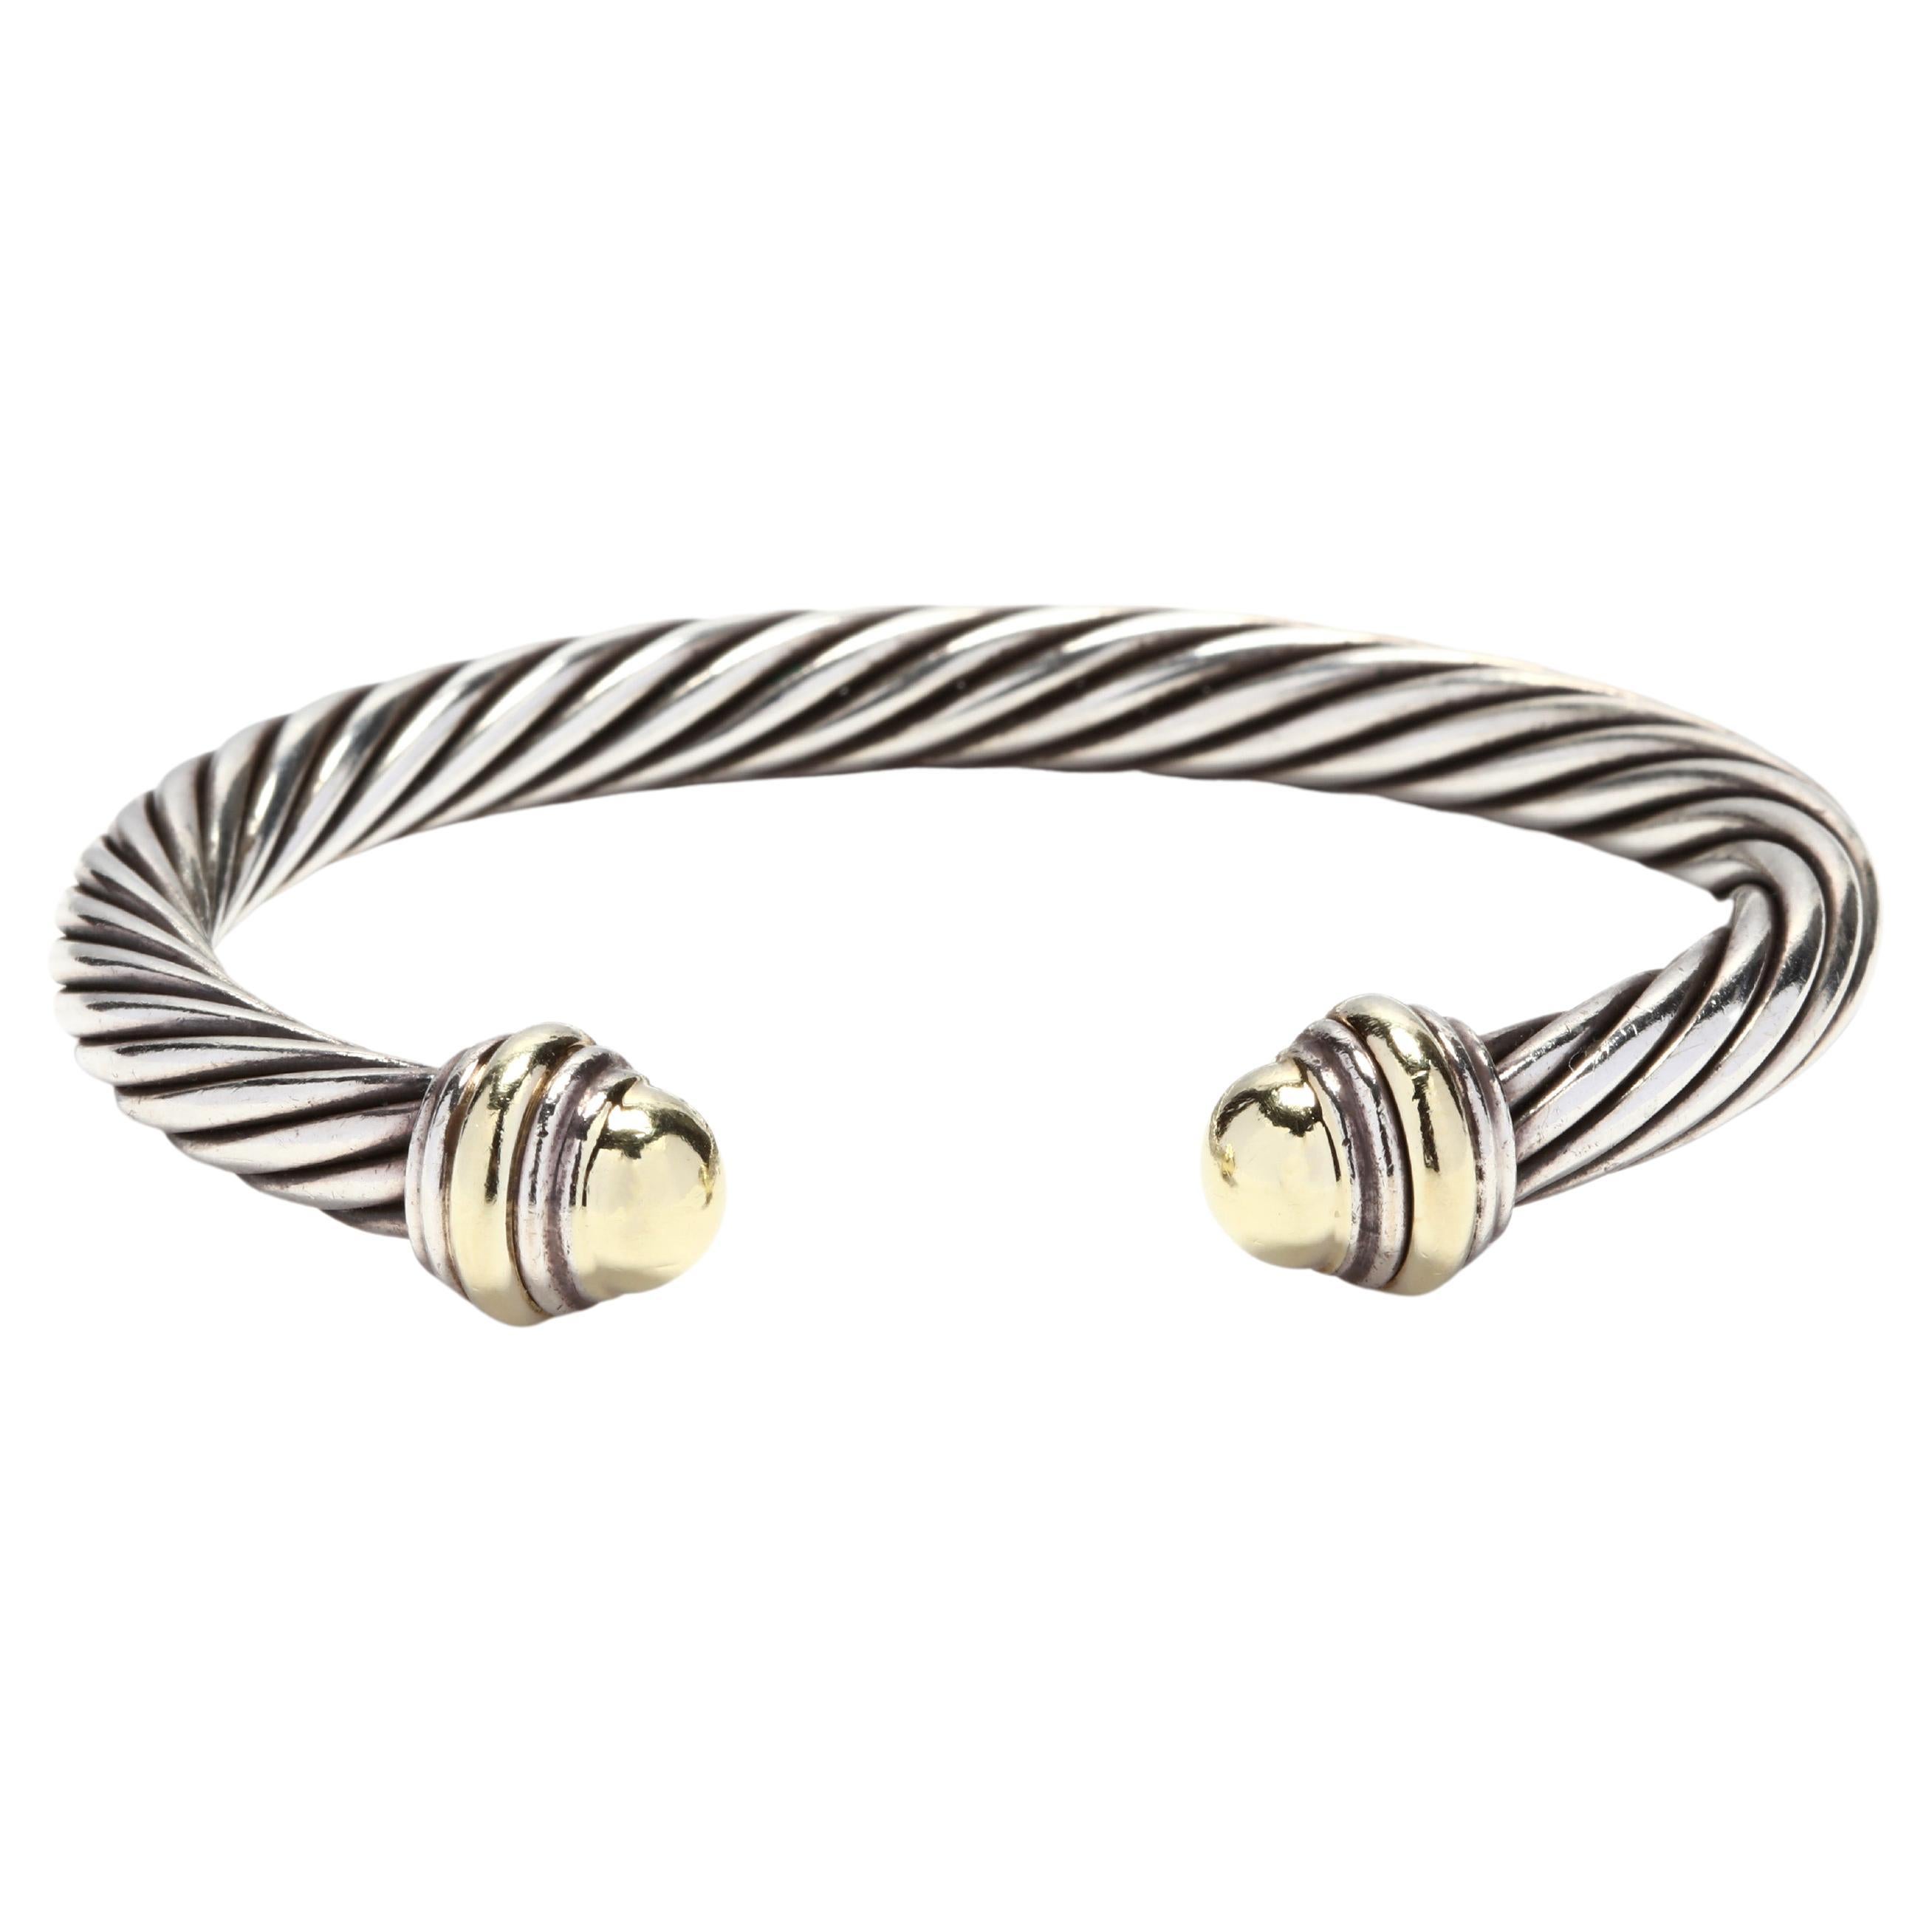 David Yurman Gold Dome Cuff Bracelet, Gold Dome, Cable Cuff Bracelet